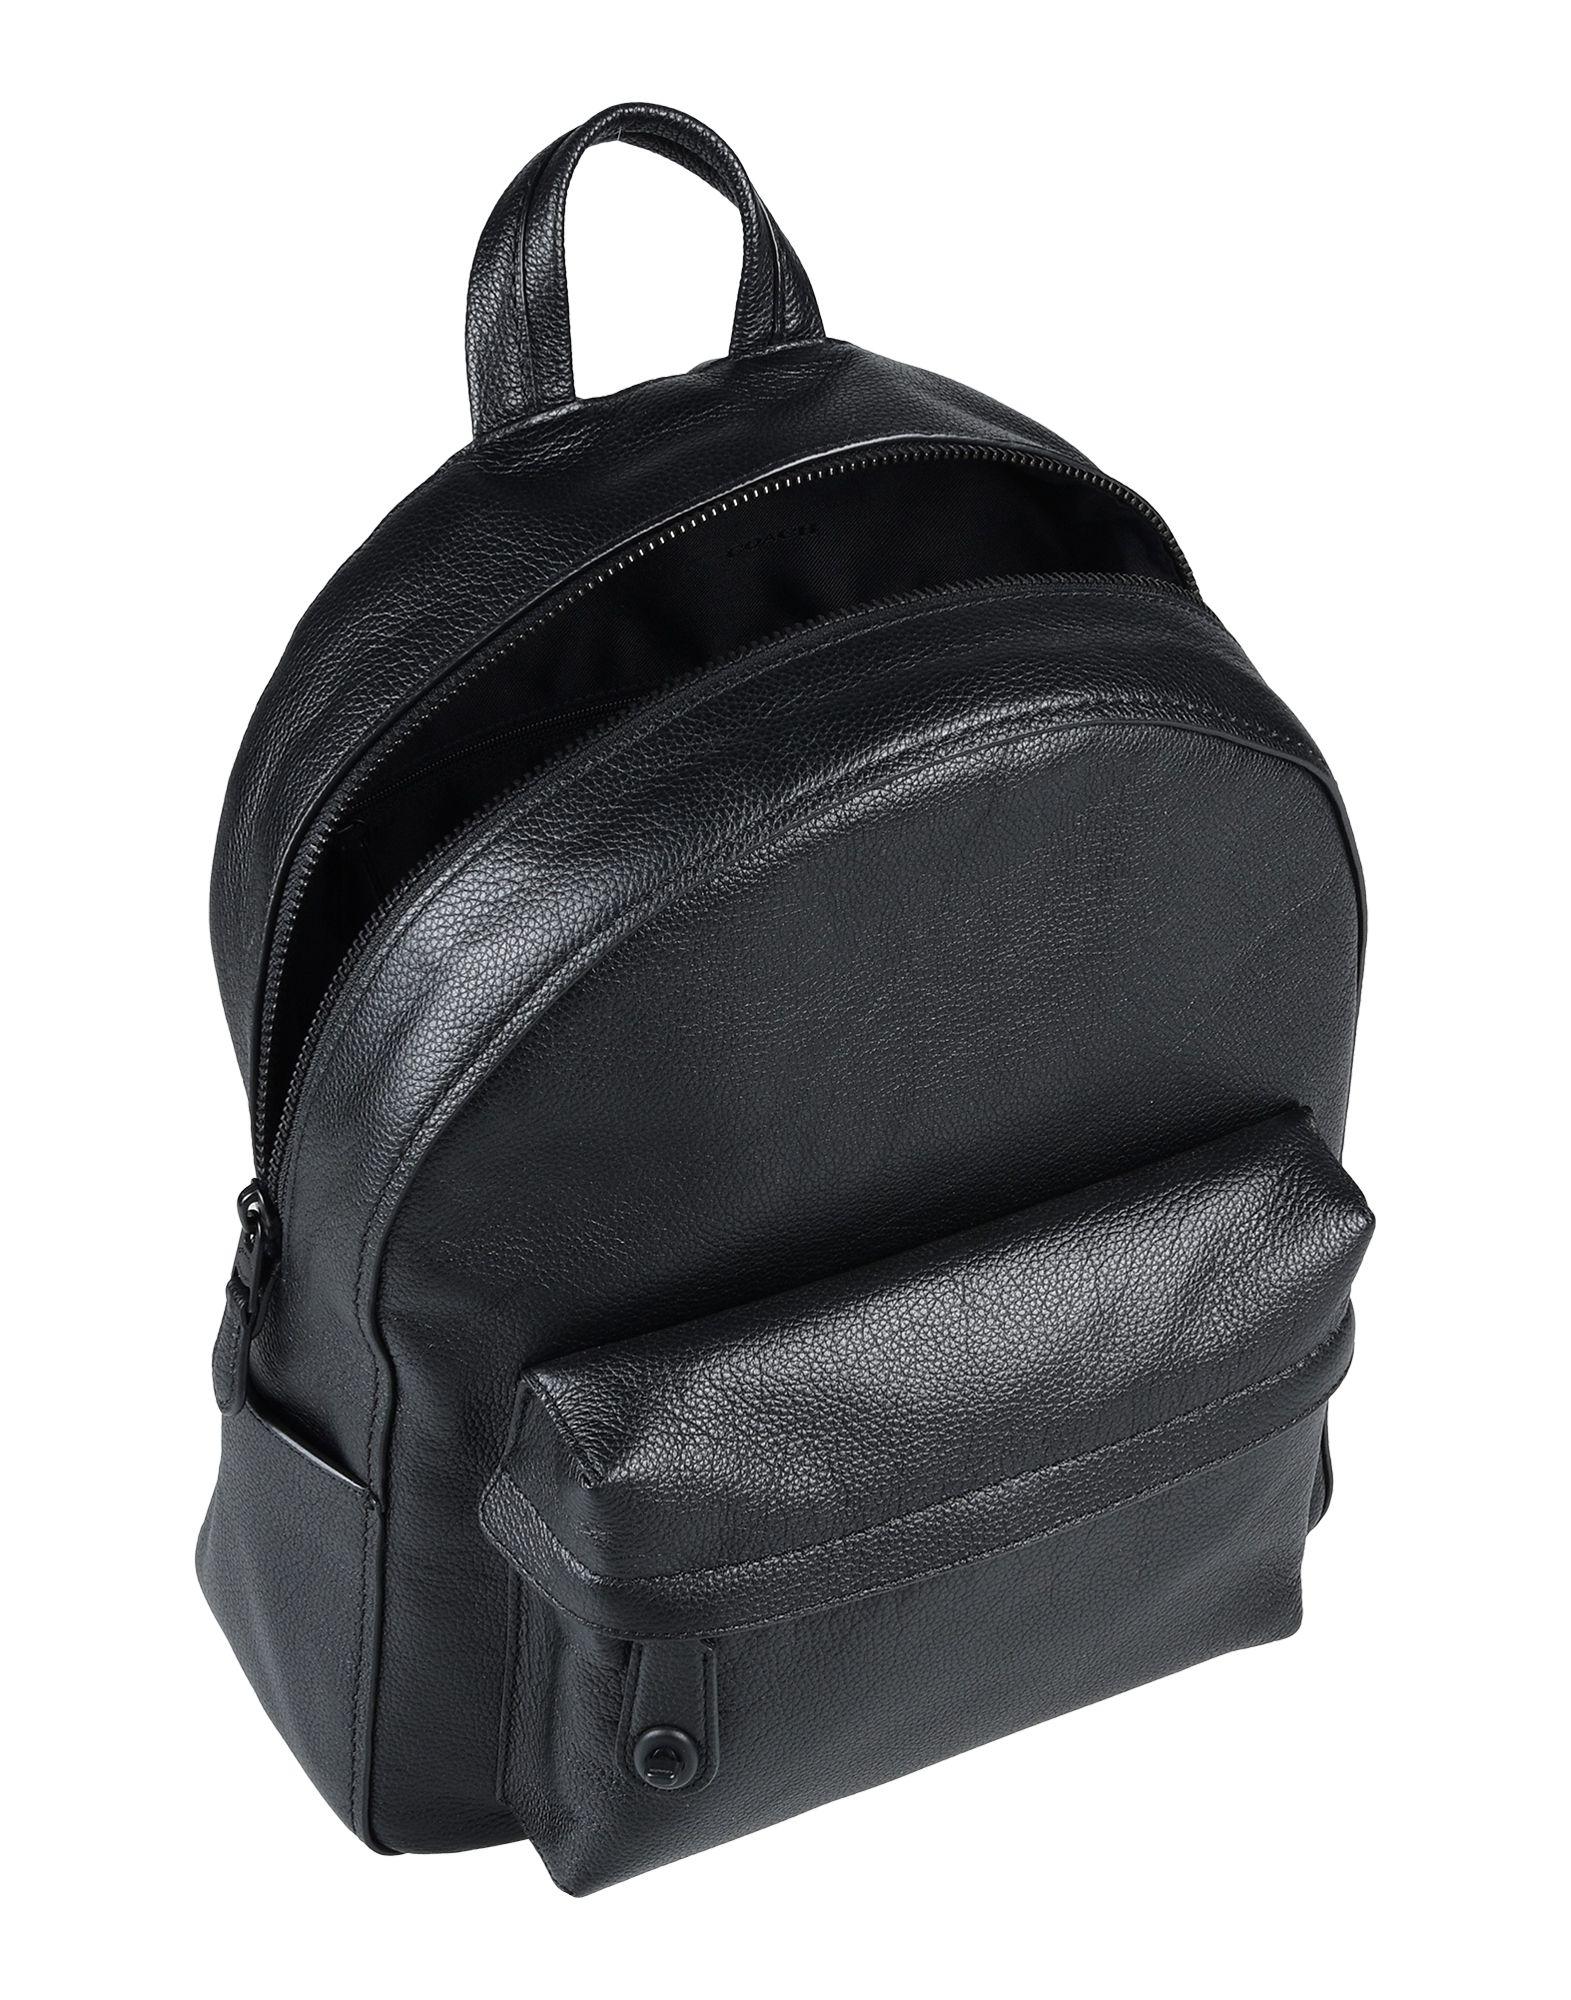 COACH Backpacks & Fanny Packs in Black - Lyst